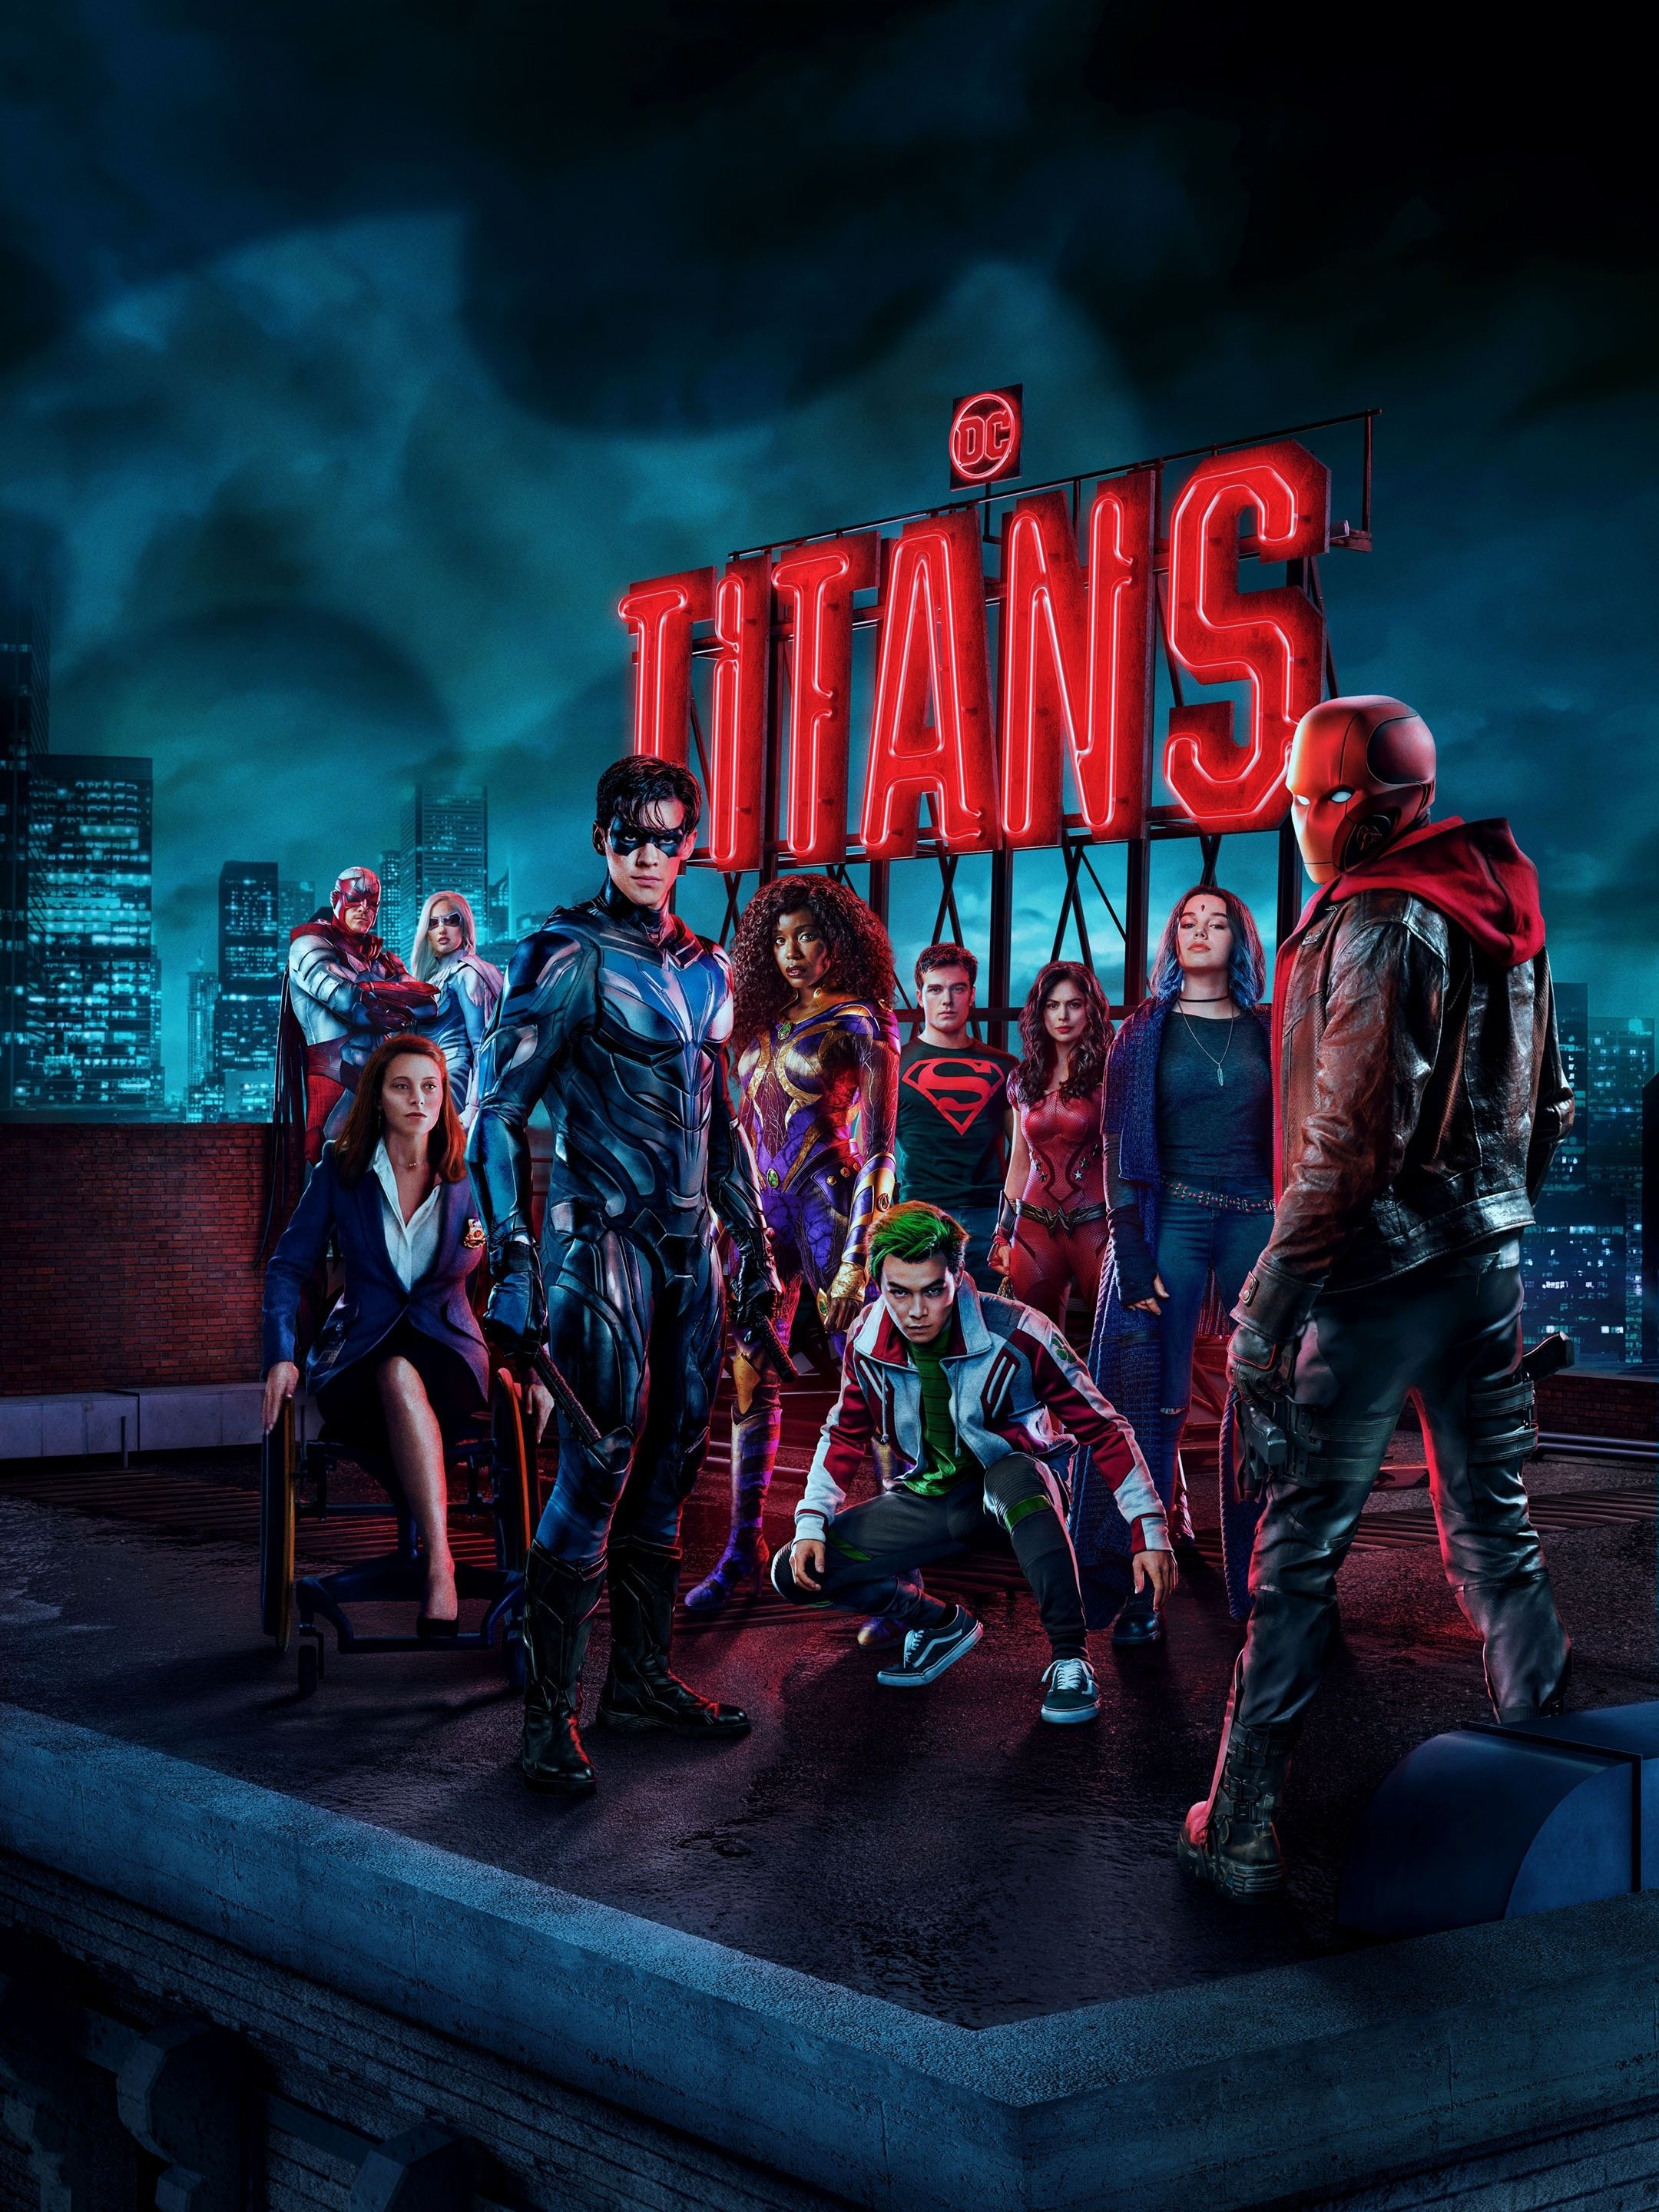 Titans Season 3 Premiere Review - Barbara Gordon, Red Hood